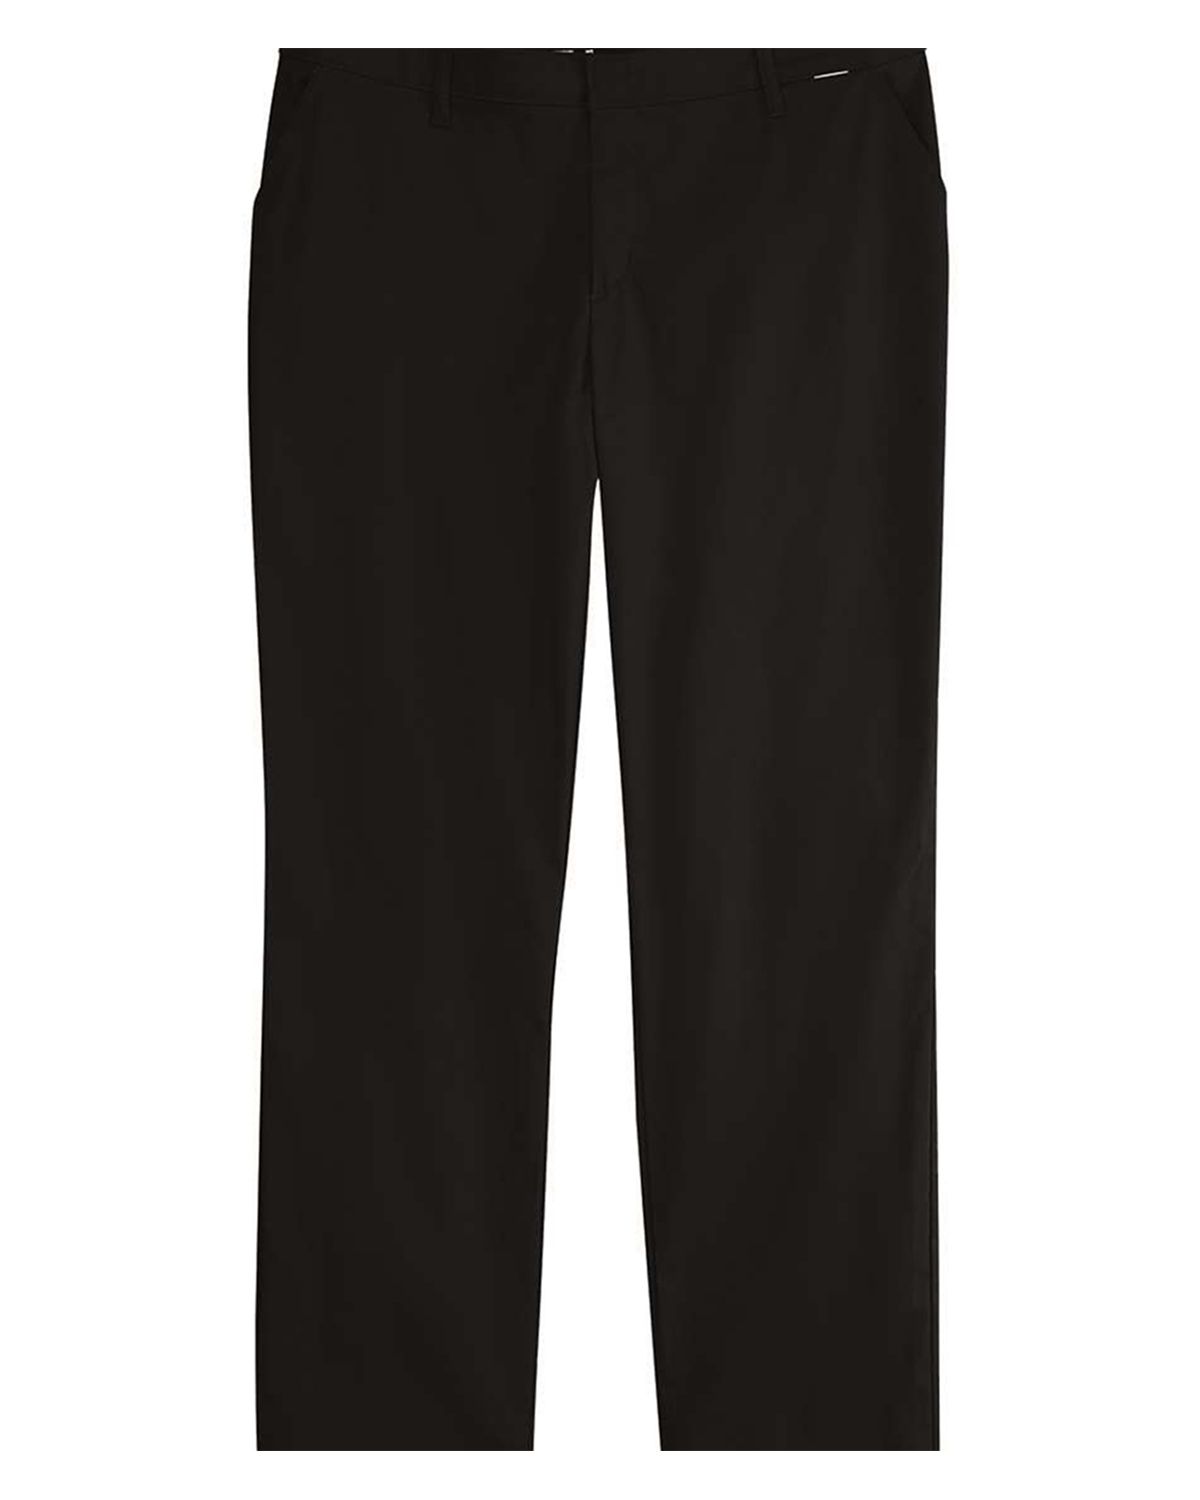 UPC 889440003839 product image for Dickies FW21 Women's Premium Flat Front Pants - Plus - Black - 18 | upcitemdb.com